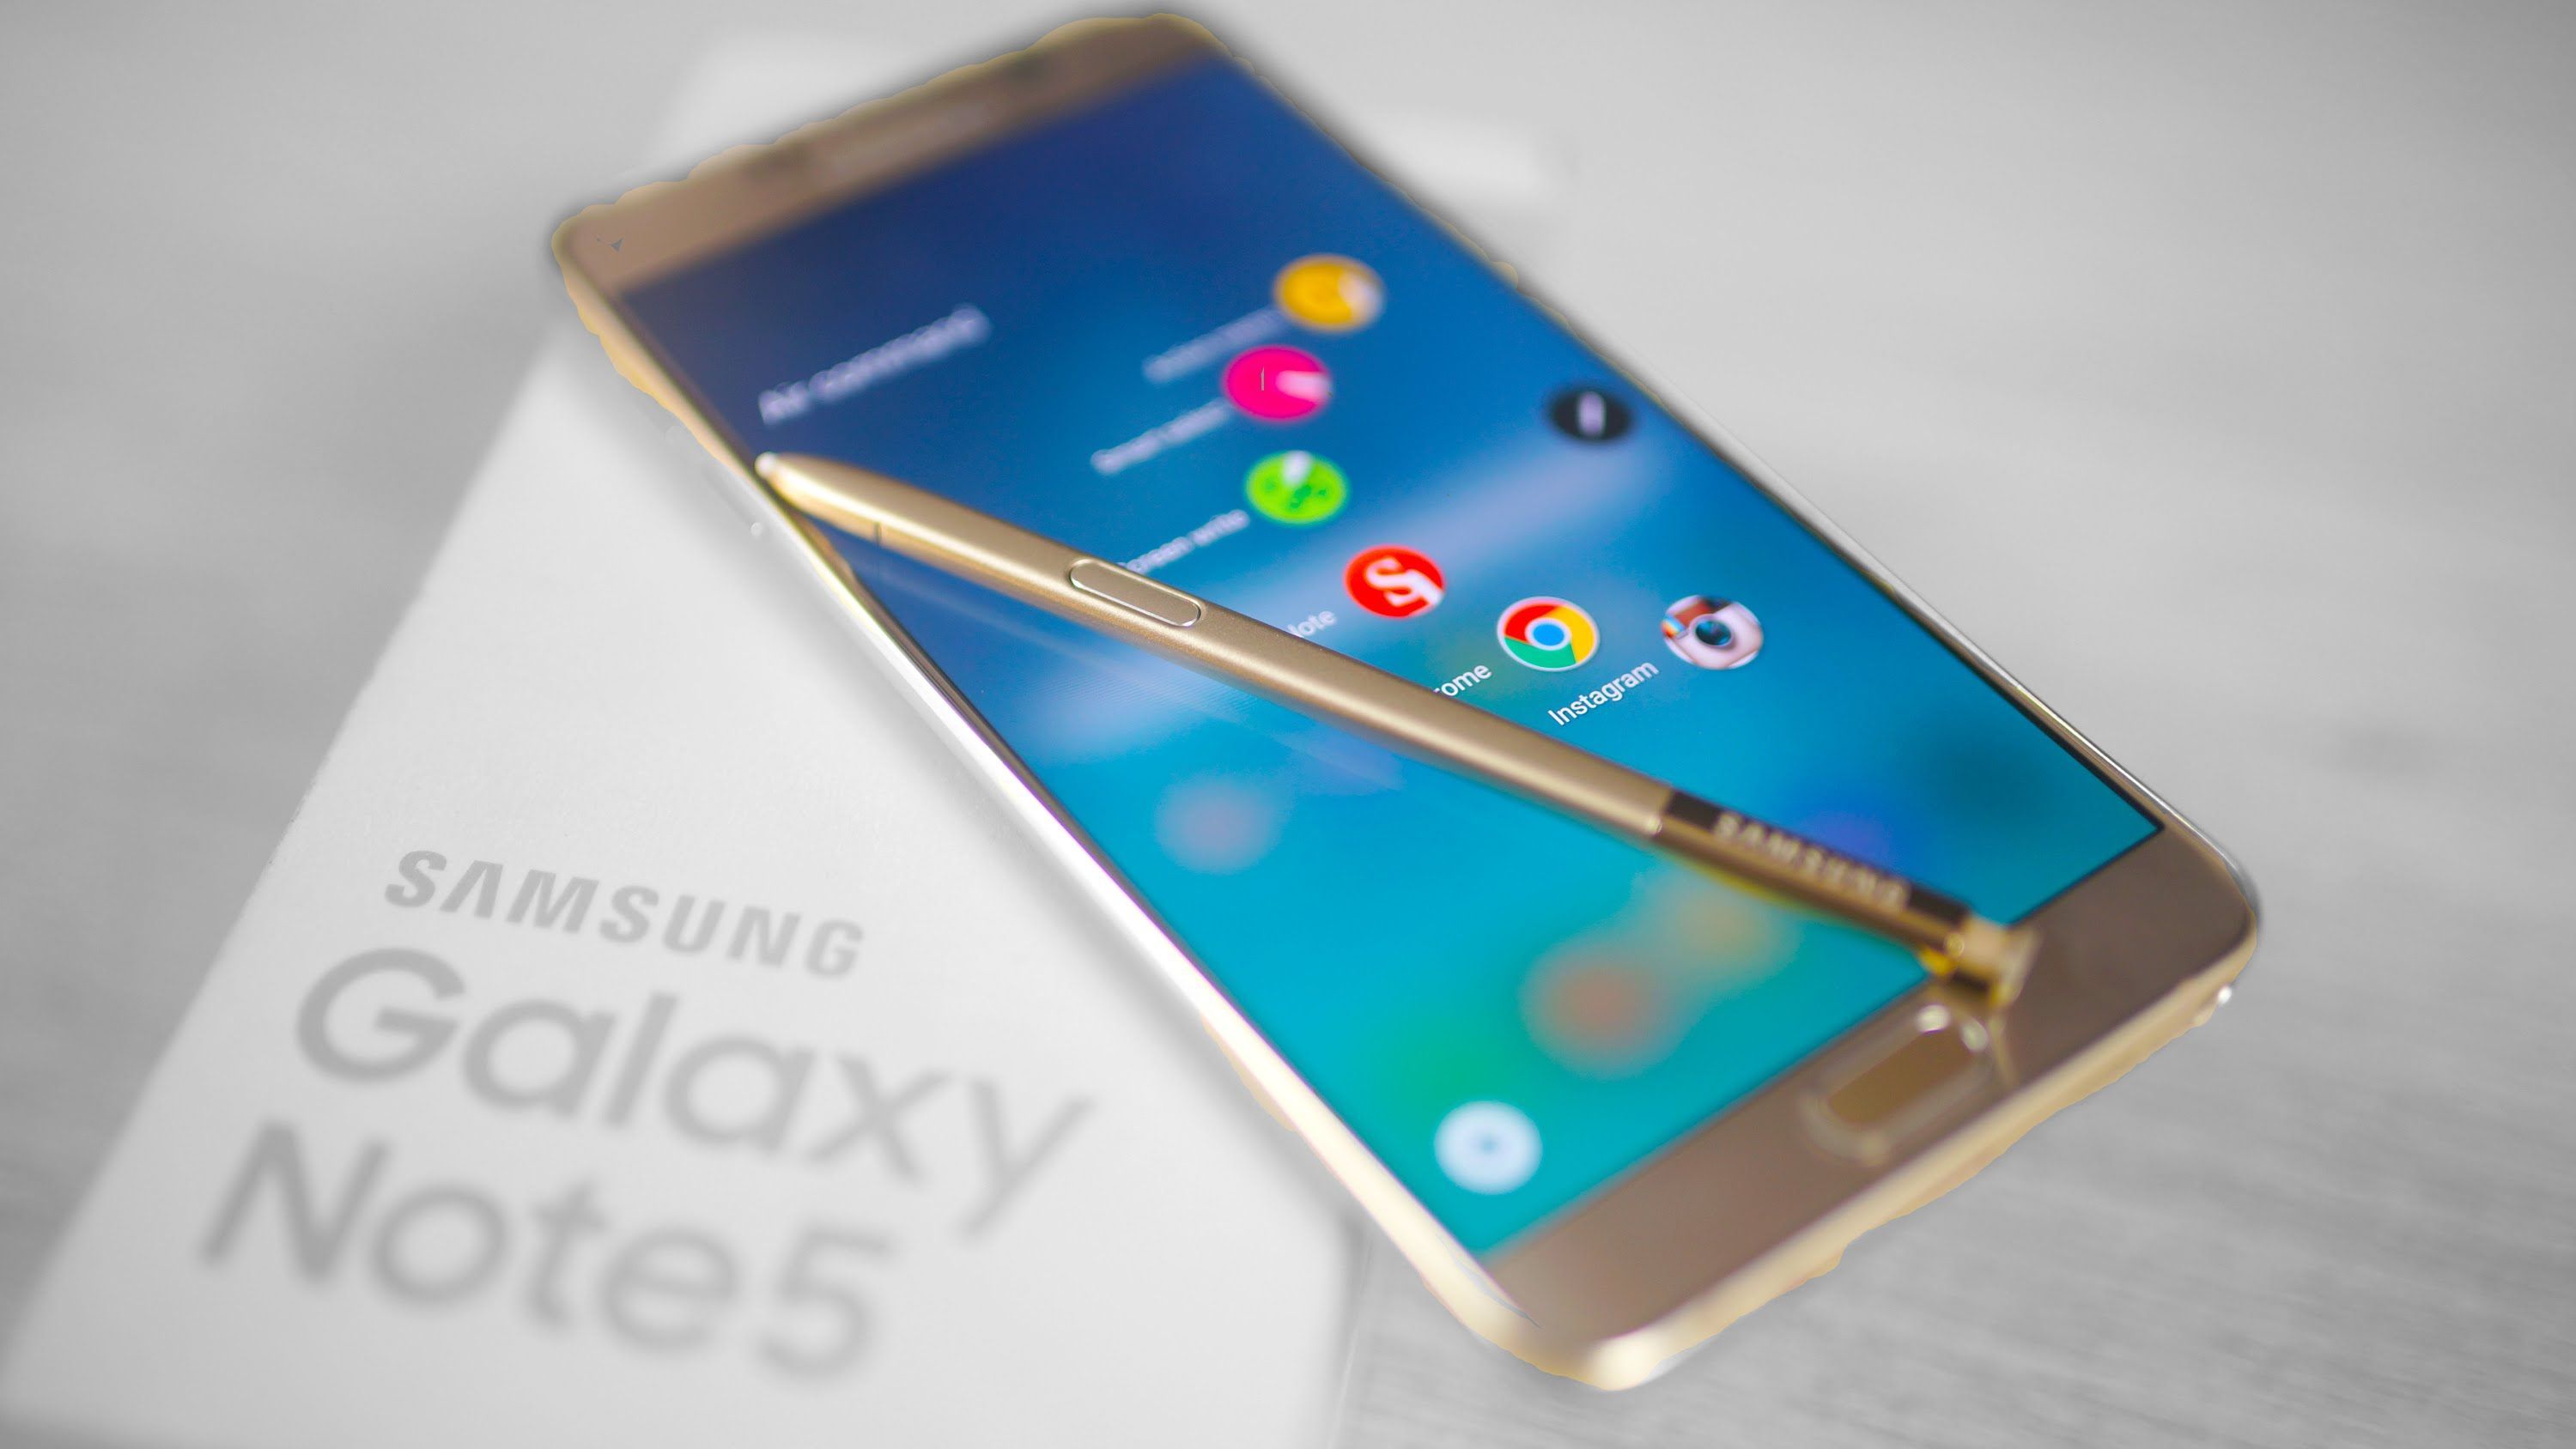 Le Samsung Galaxy Note 5 sera disponible en France début 2016